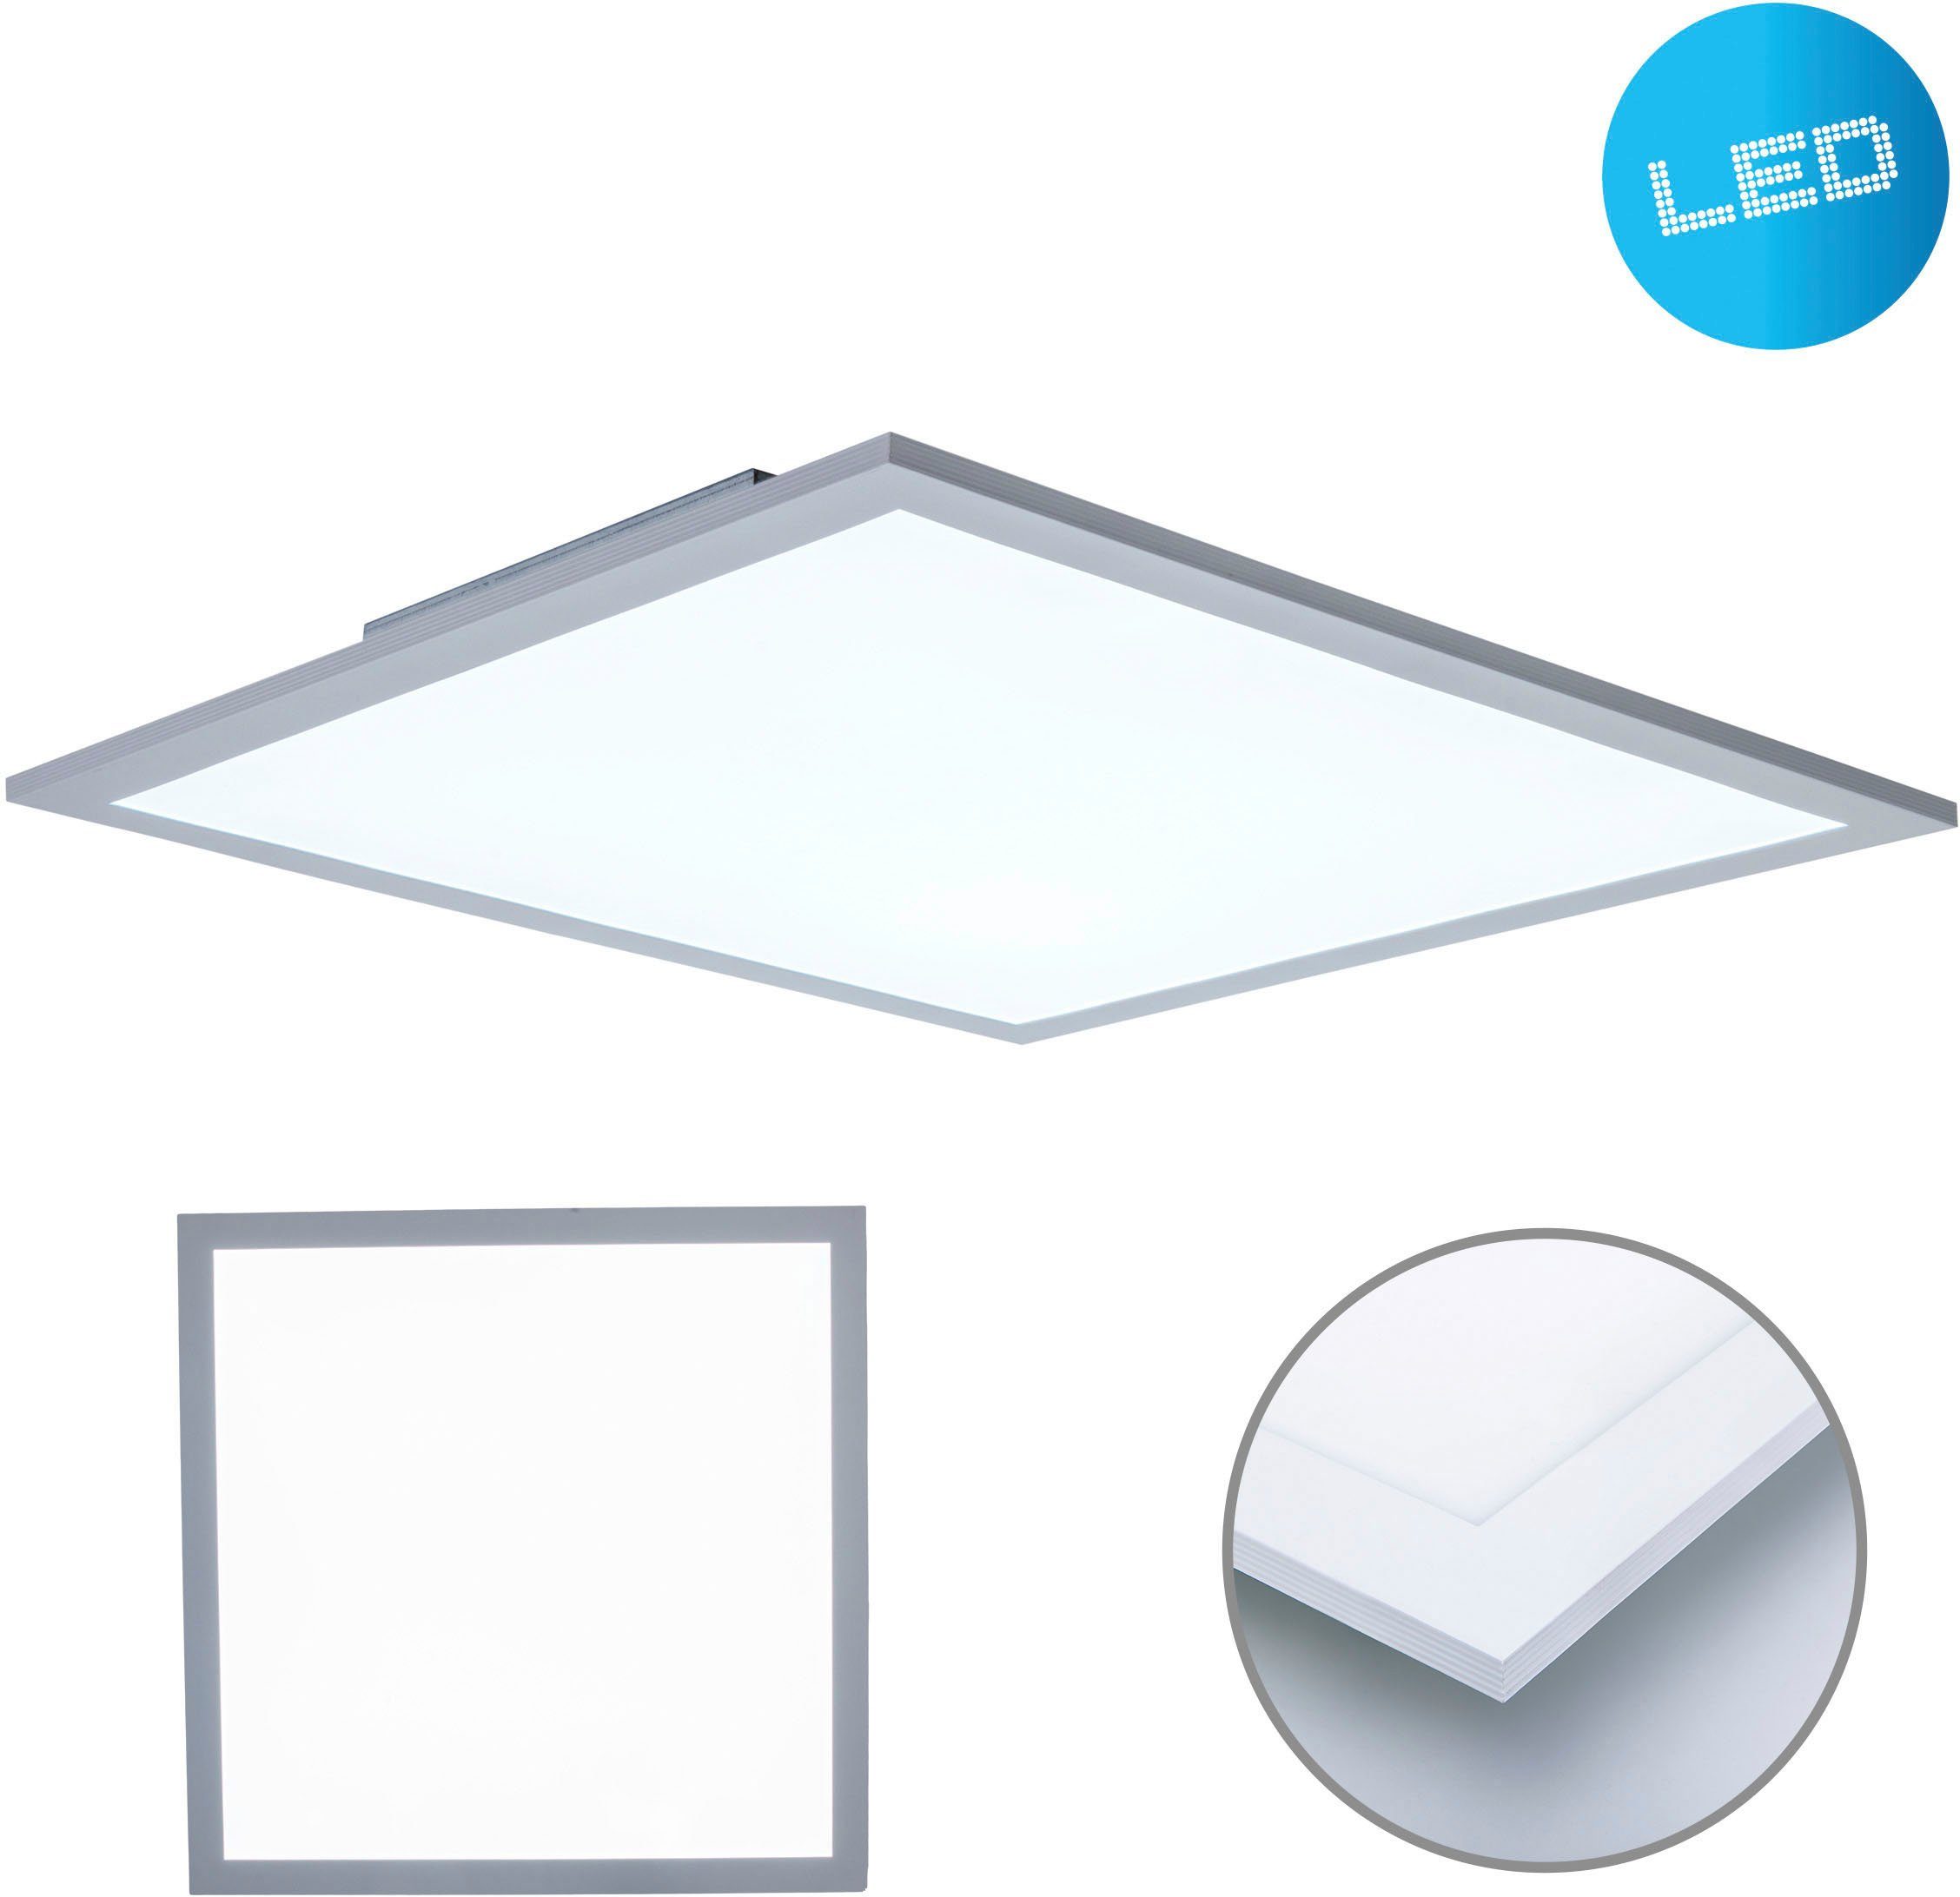 näve LED Panel Nicola, LED fest integriert, Neutralweiß, Aufbaupanel weiß 45x45cm, H: 6cm, 120 LED, Lichtfarbe neutralweiß | Panels